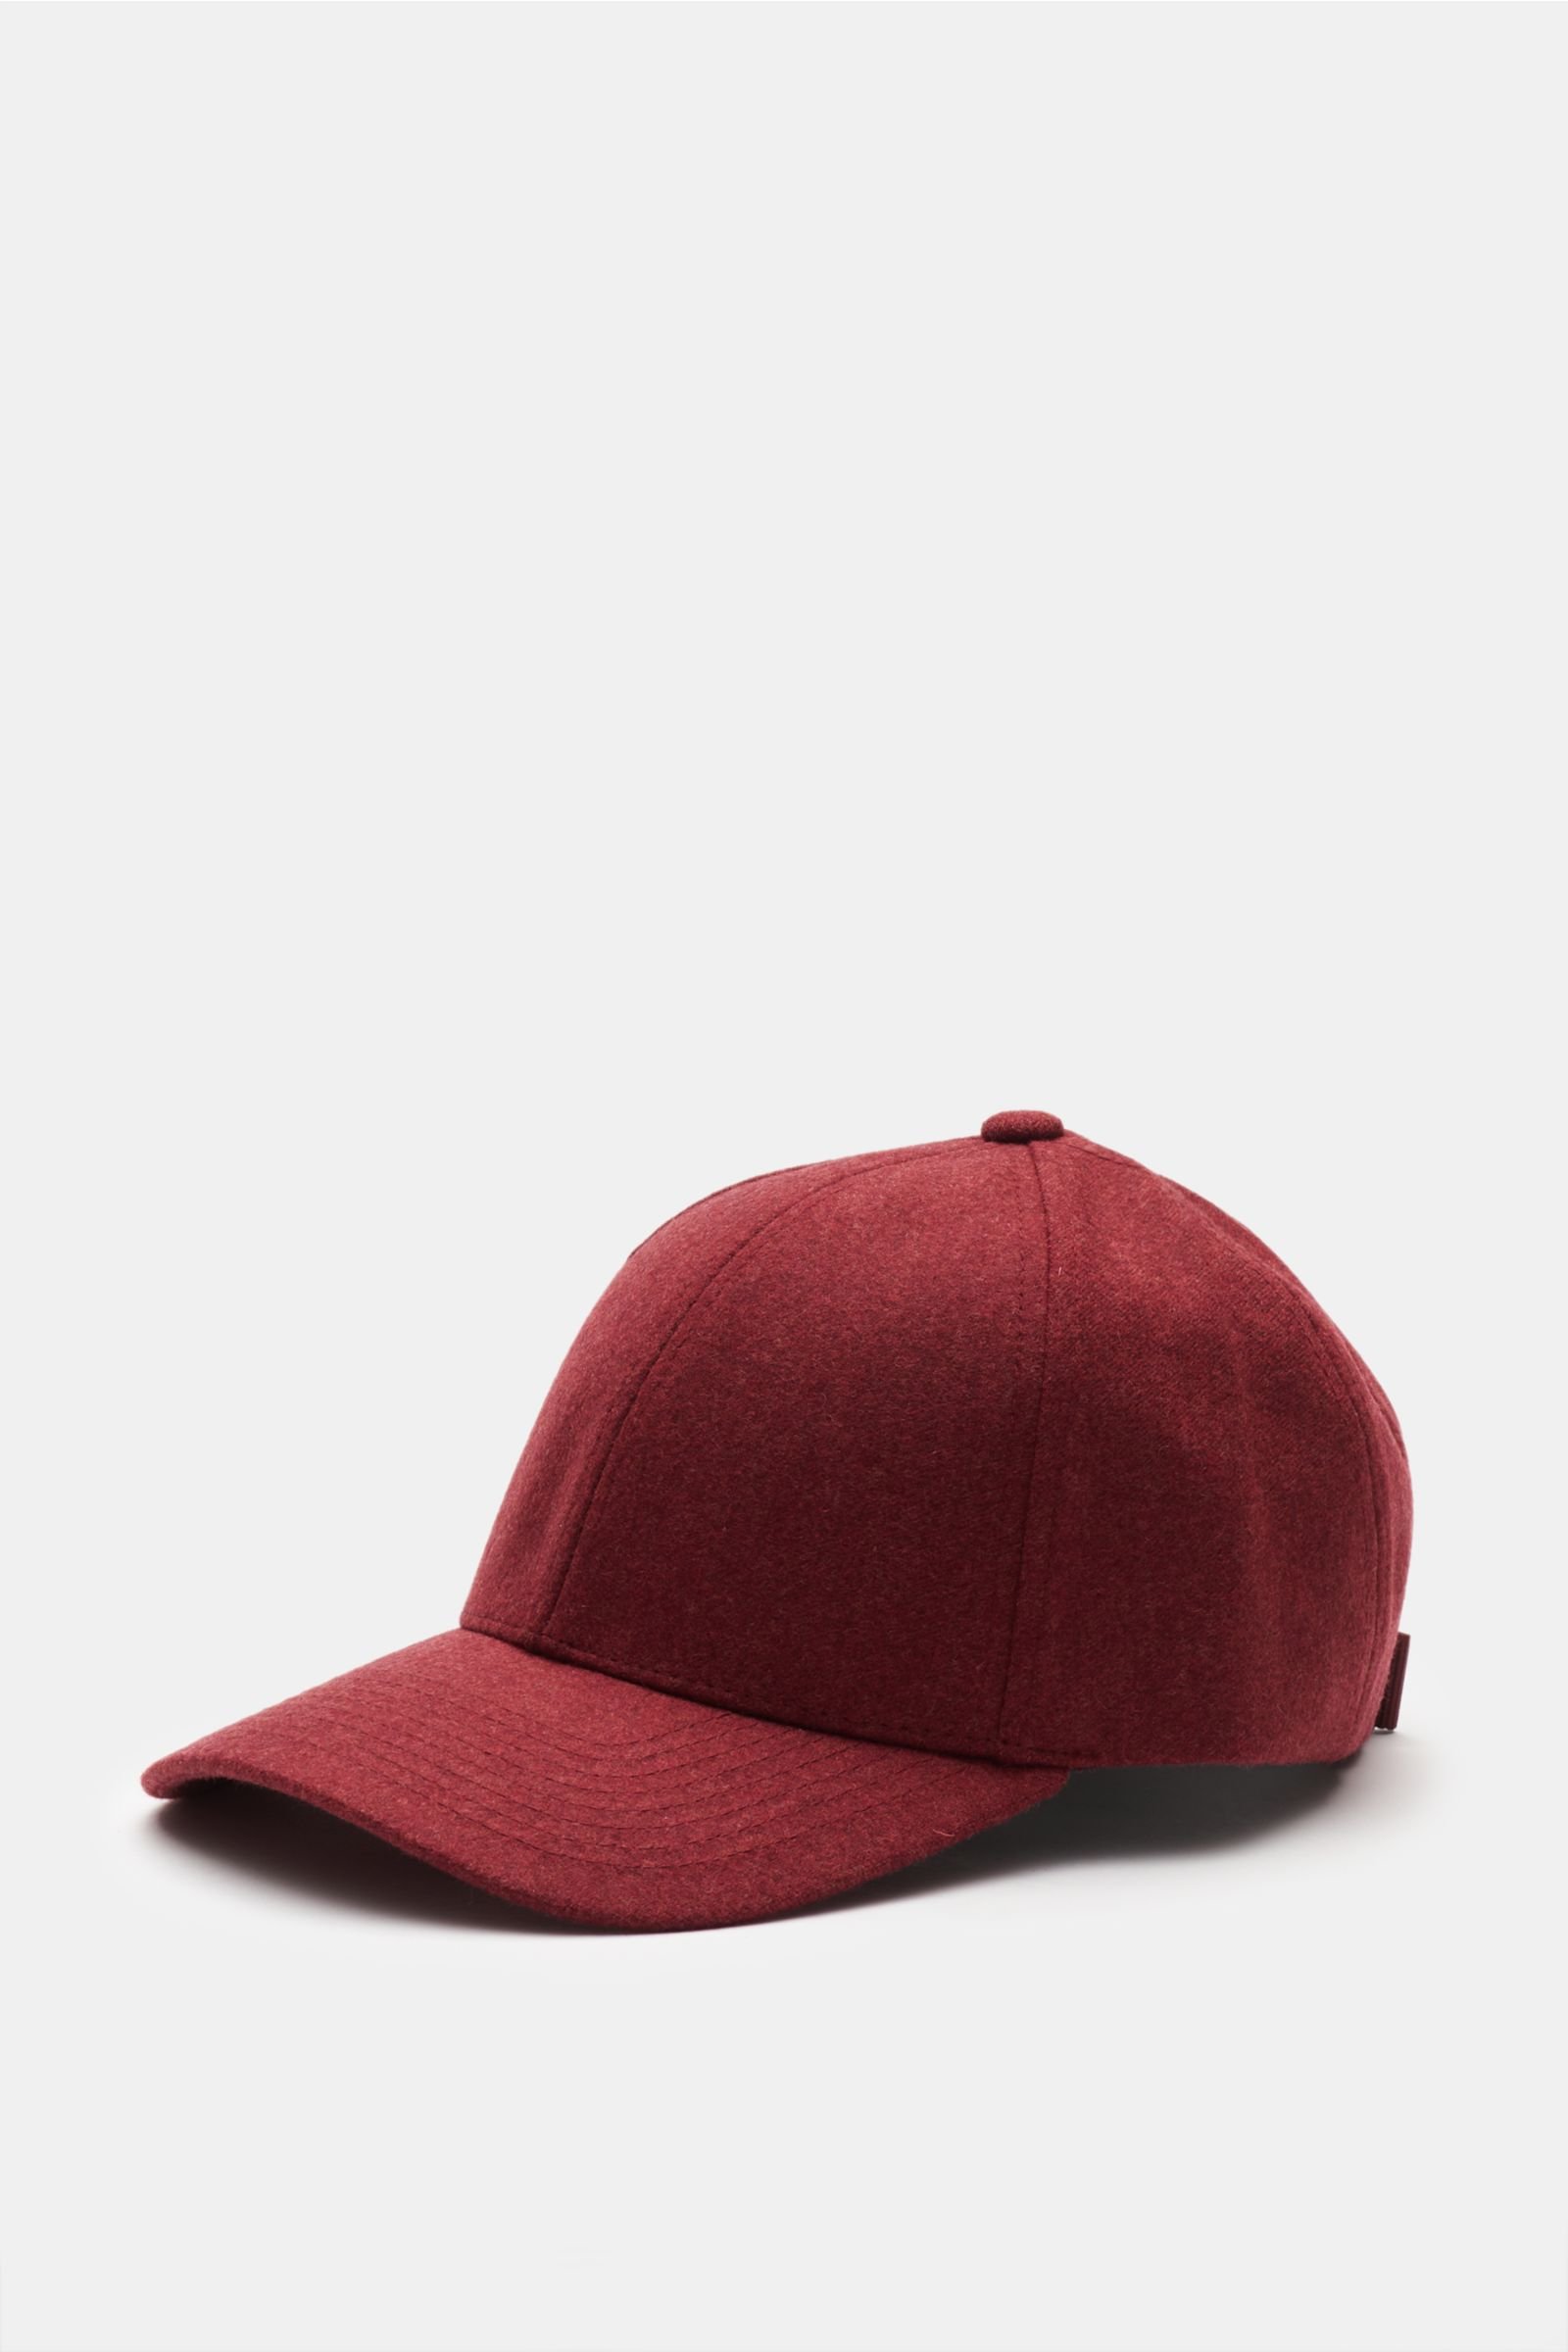 Baseball-Cap 'Maroon Red Wool' dunkelrot